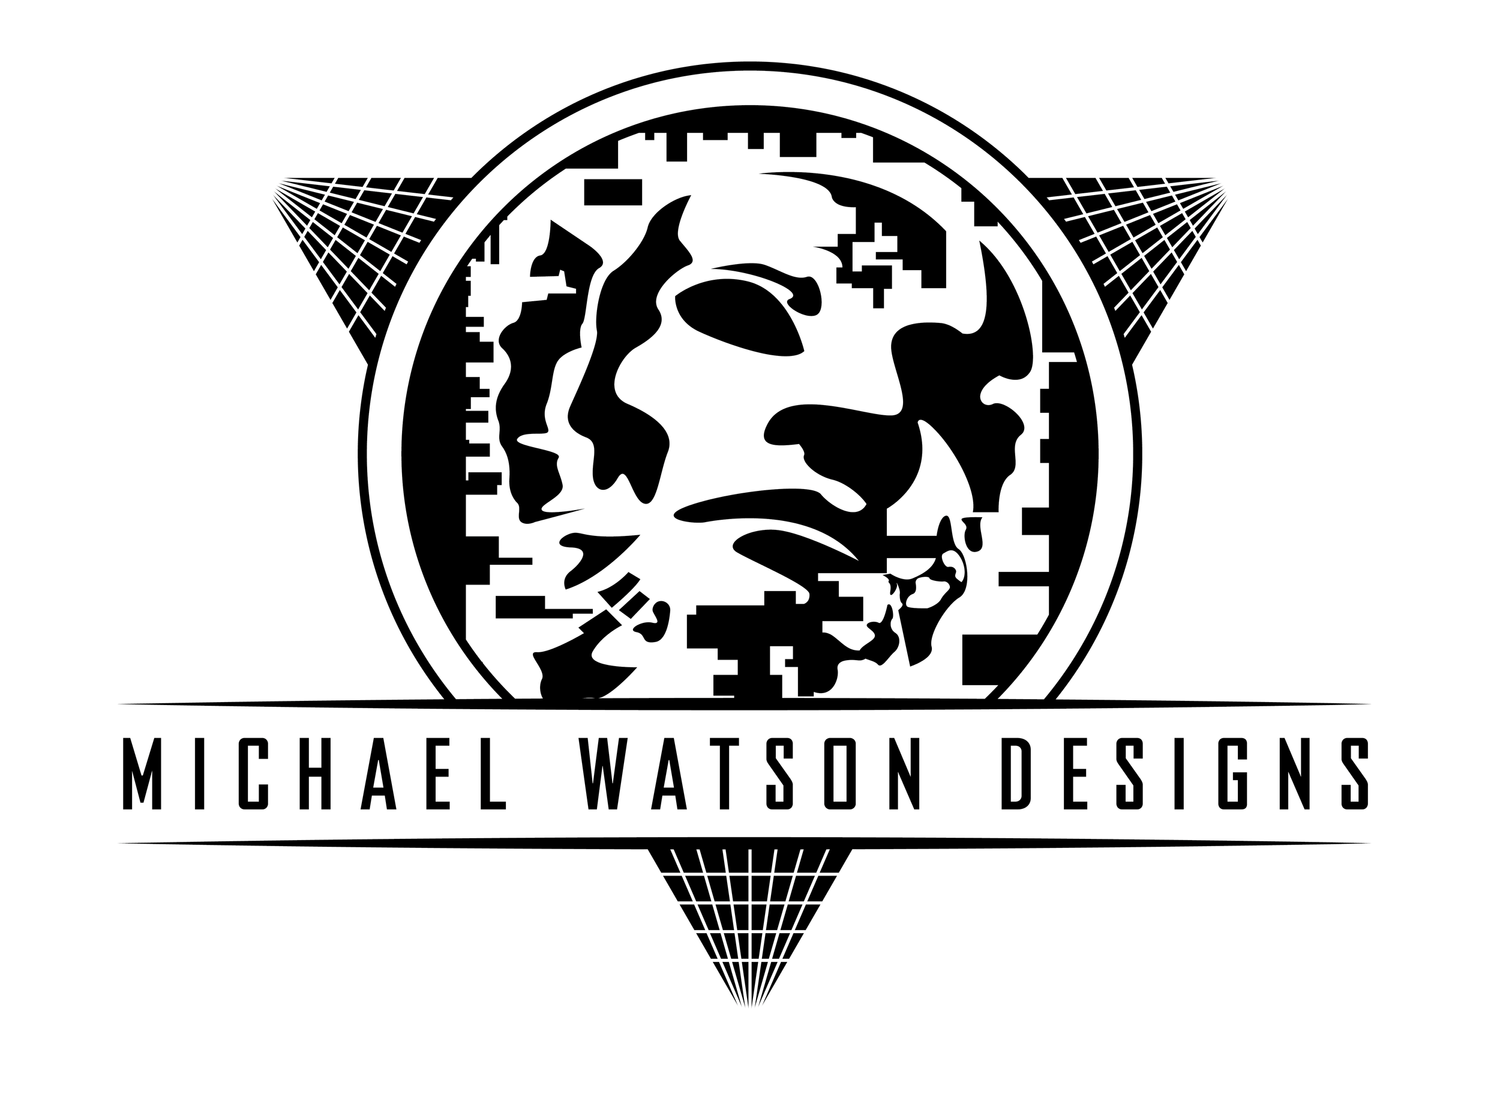 Michael Watson Designs